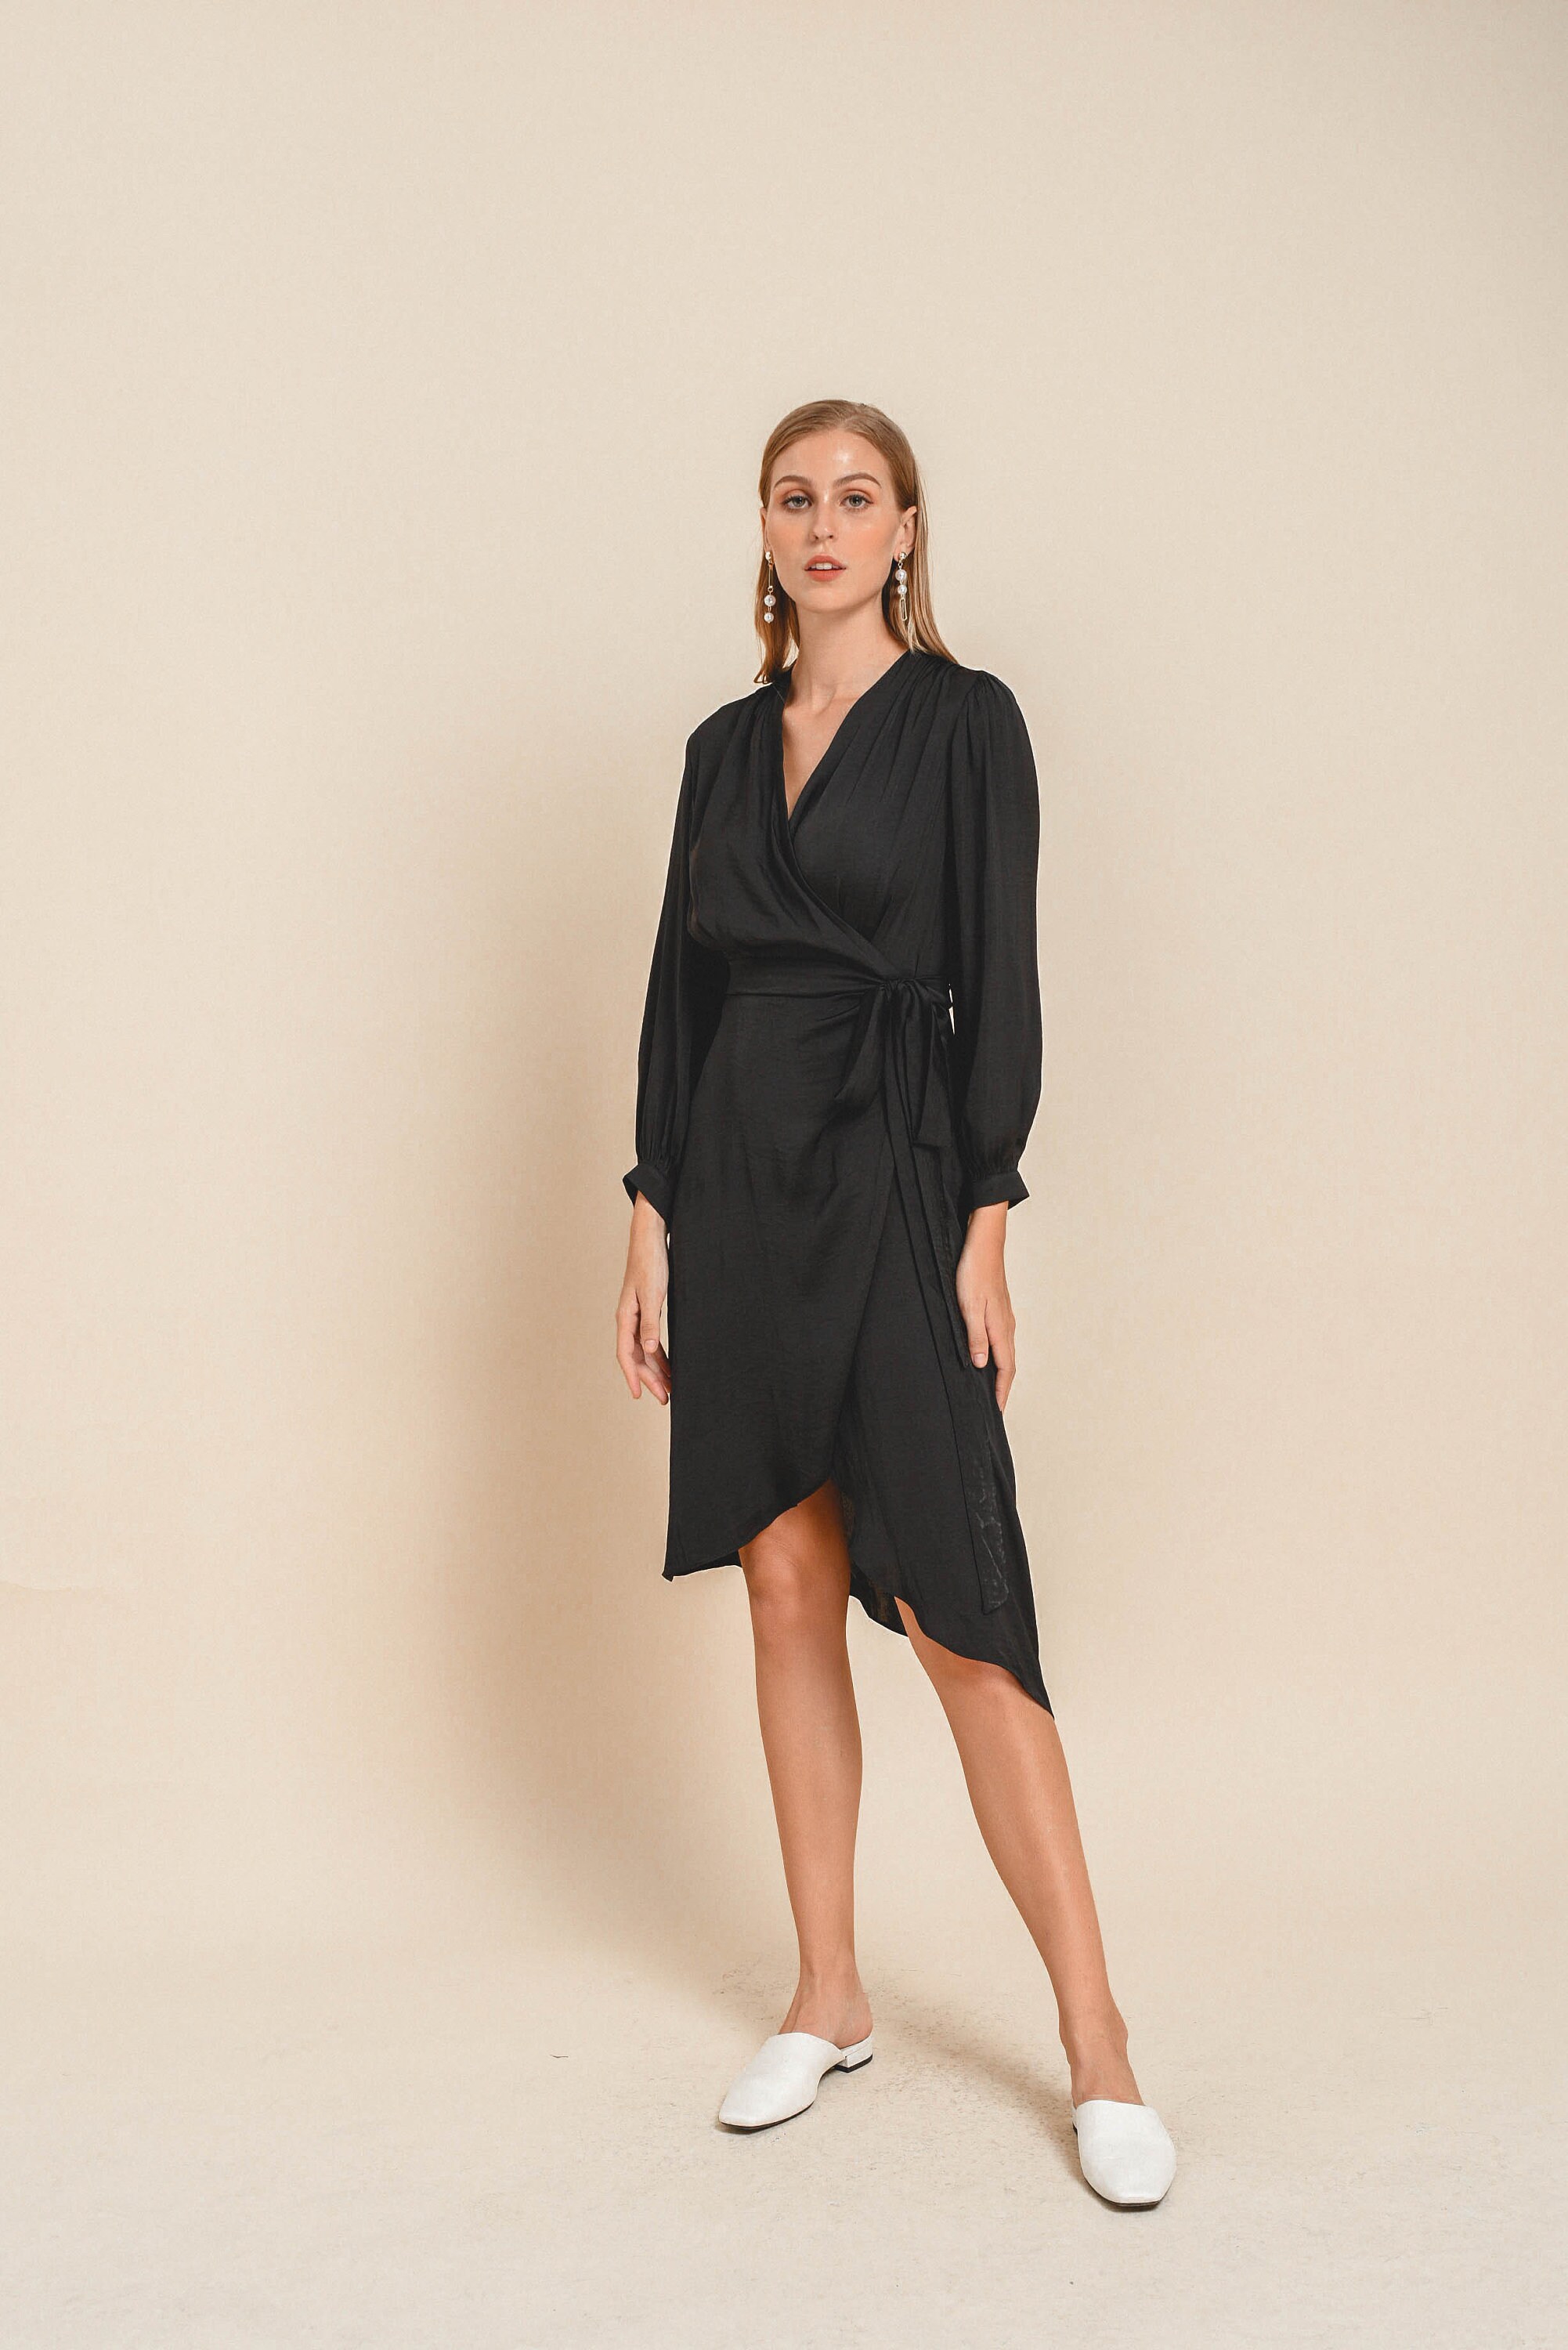 Rachel Knee Length Wrap Dress / Long Sleeves Wrap Dress / High | Etsy UK